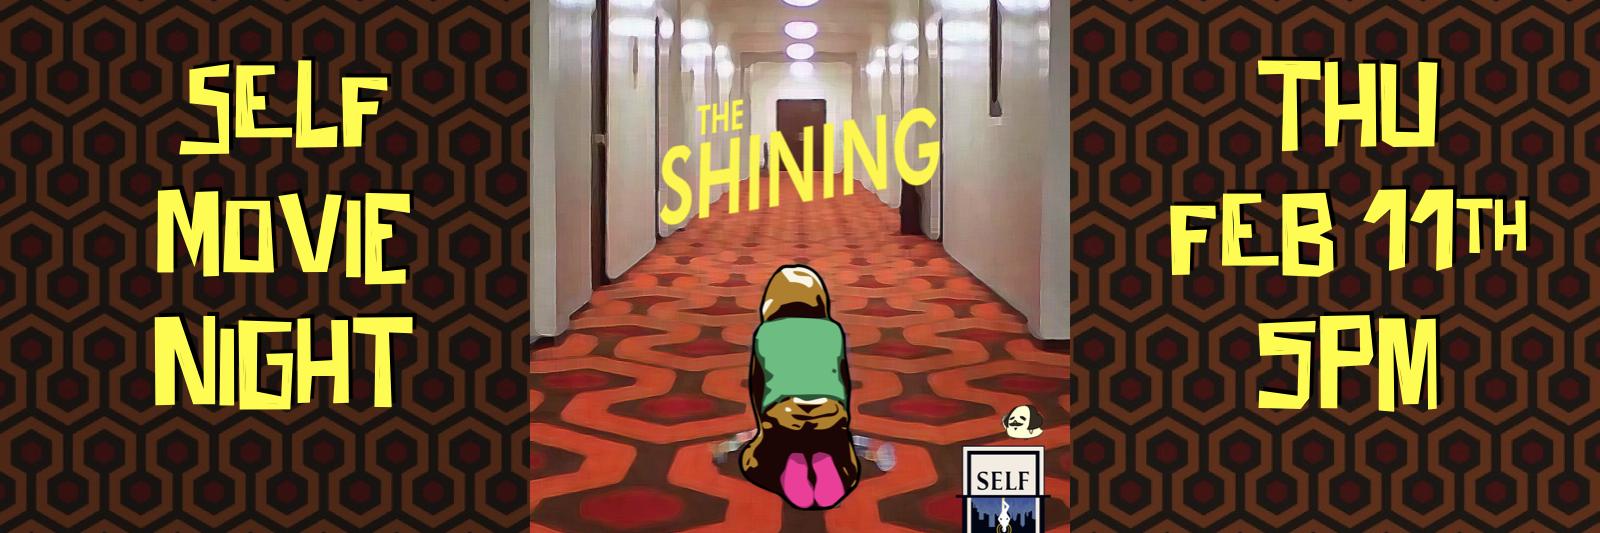 An artistic interpretation of the classic hotel hallway from the Shining: SELF Movie Night